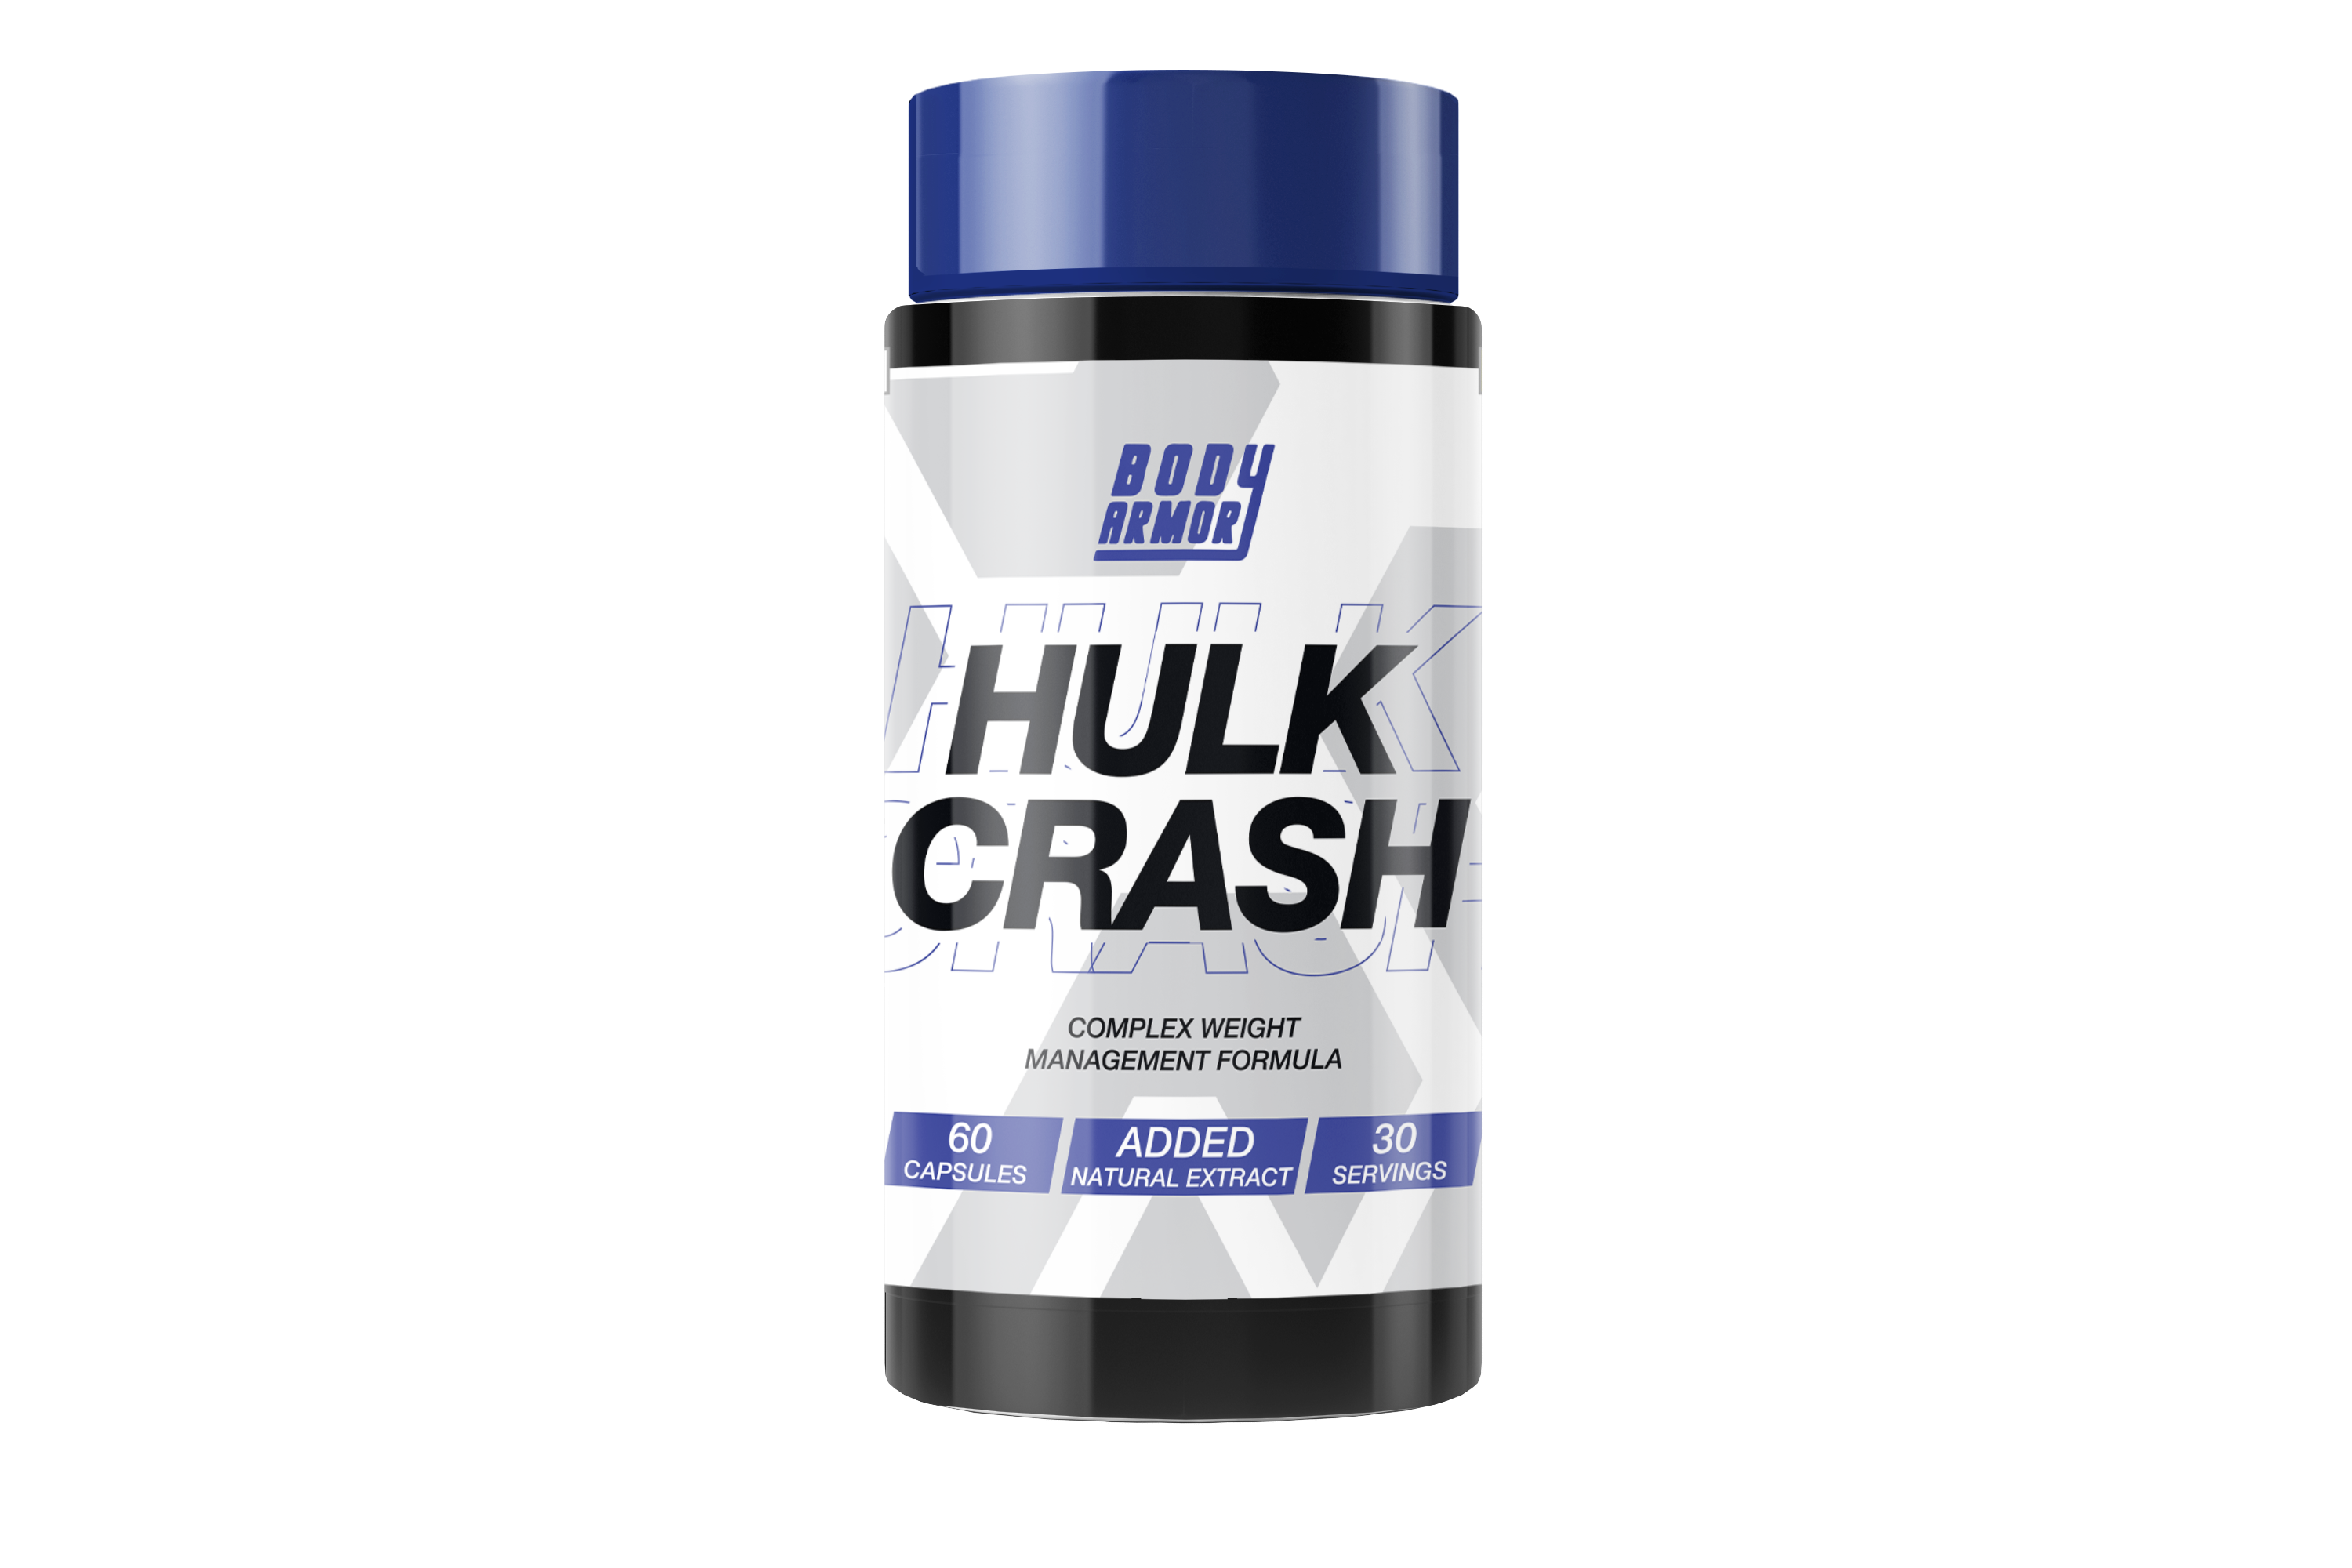 Body Armor HULK CRASH - Powerful Weight Management Formula